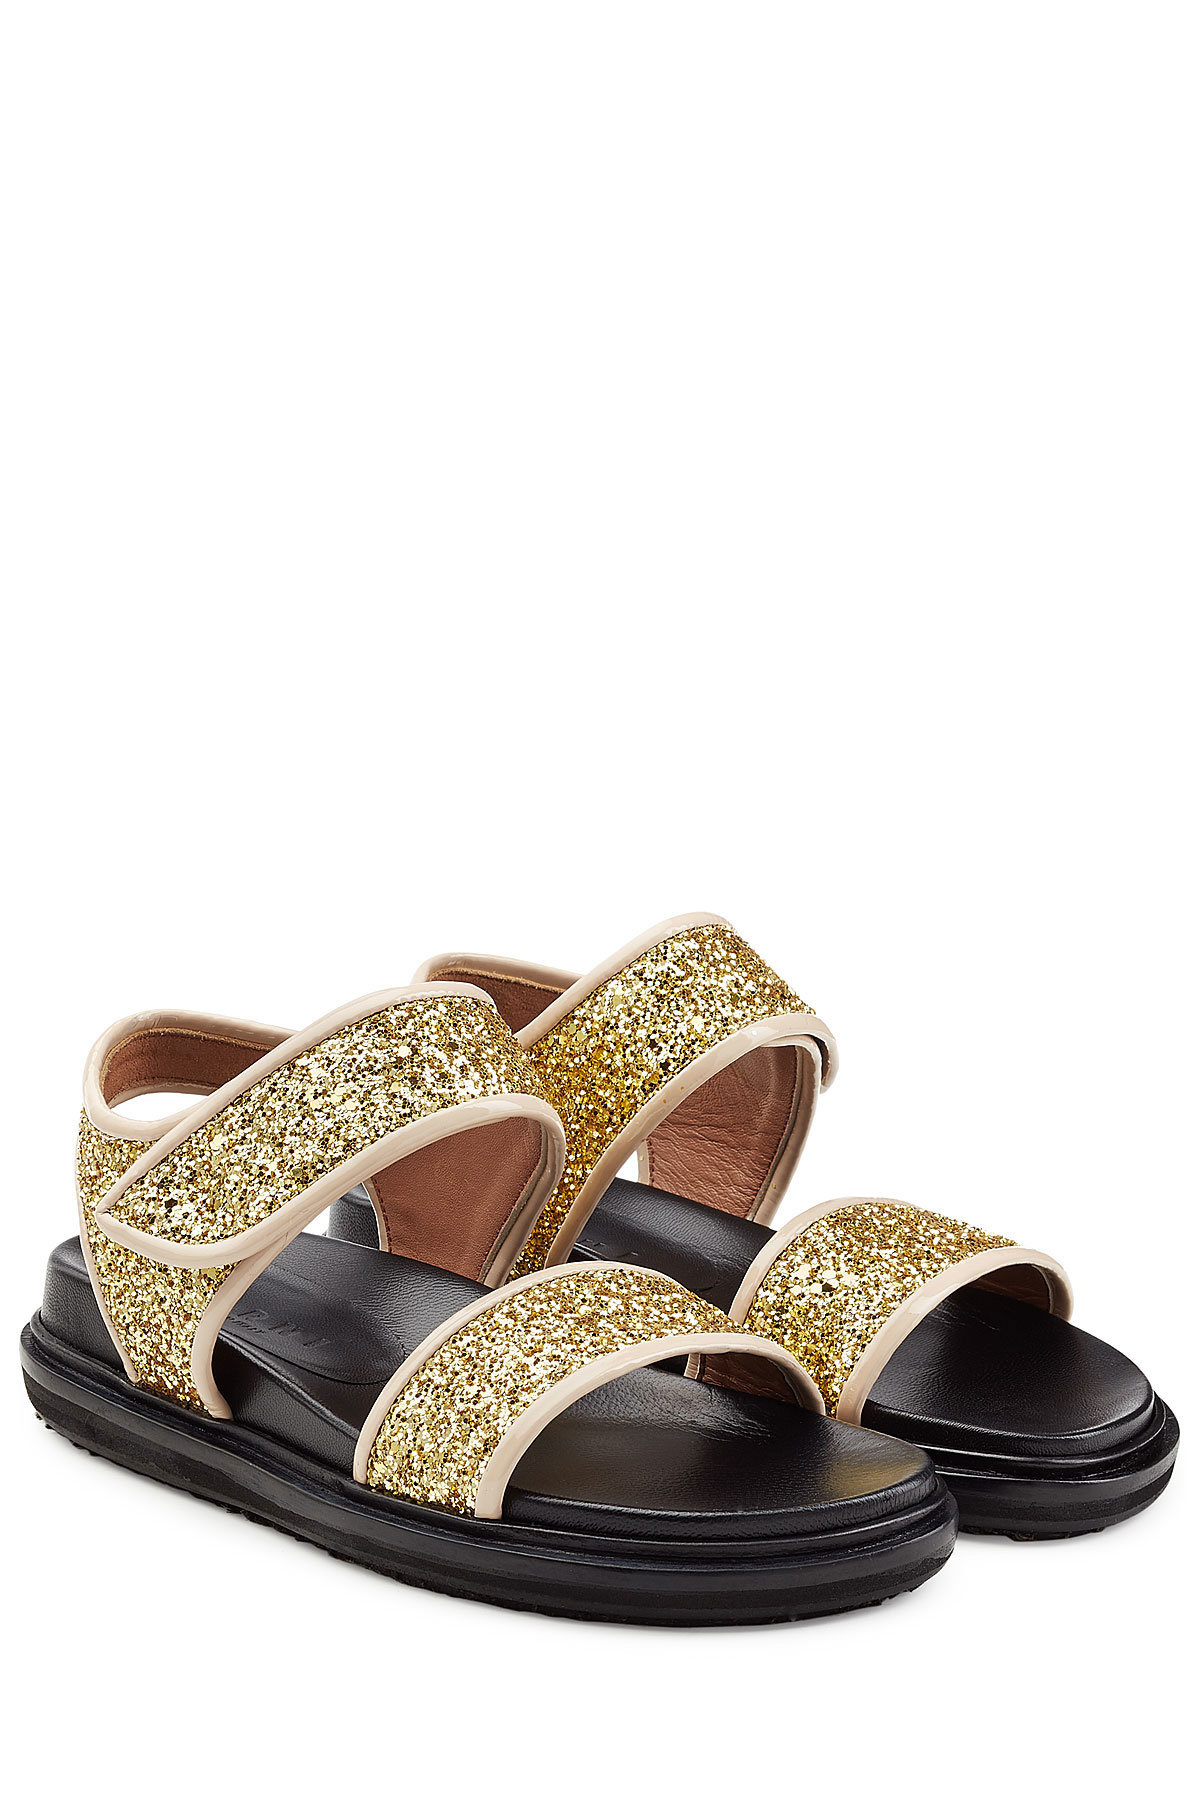 Marni - Glitter Sandals